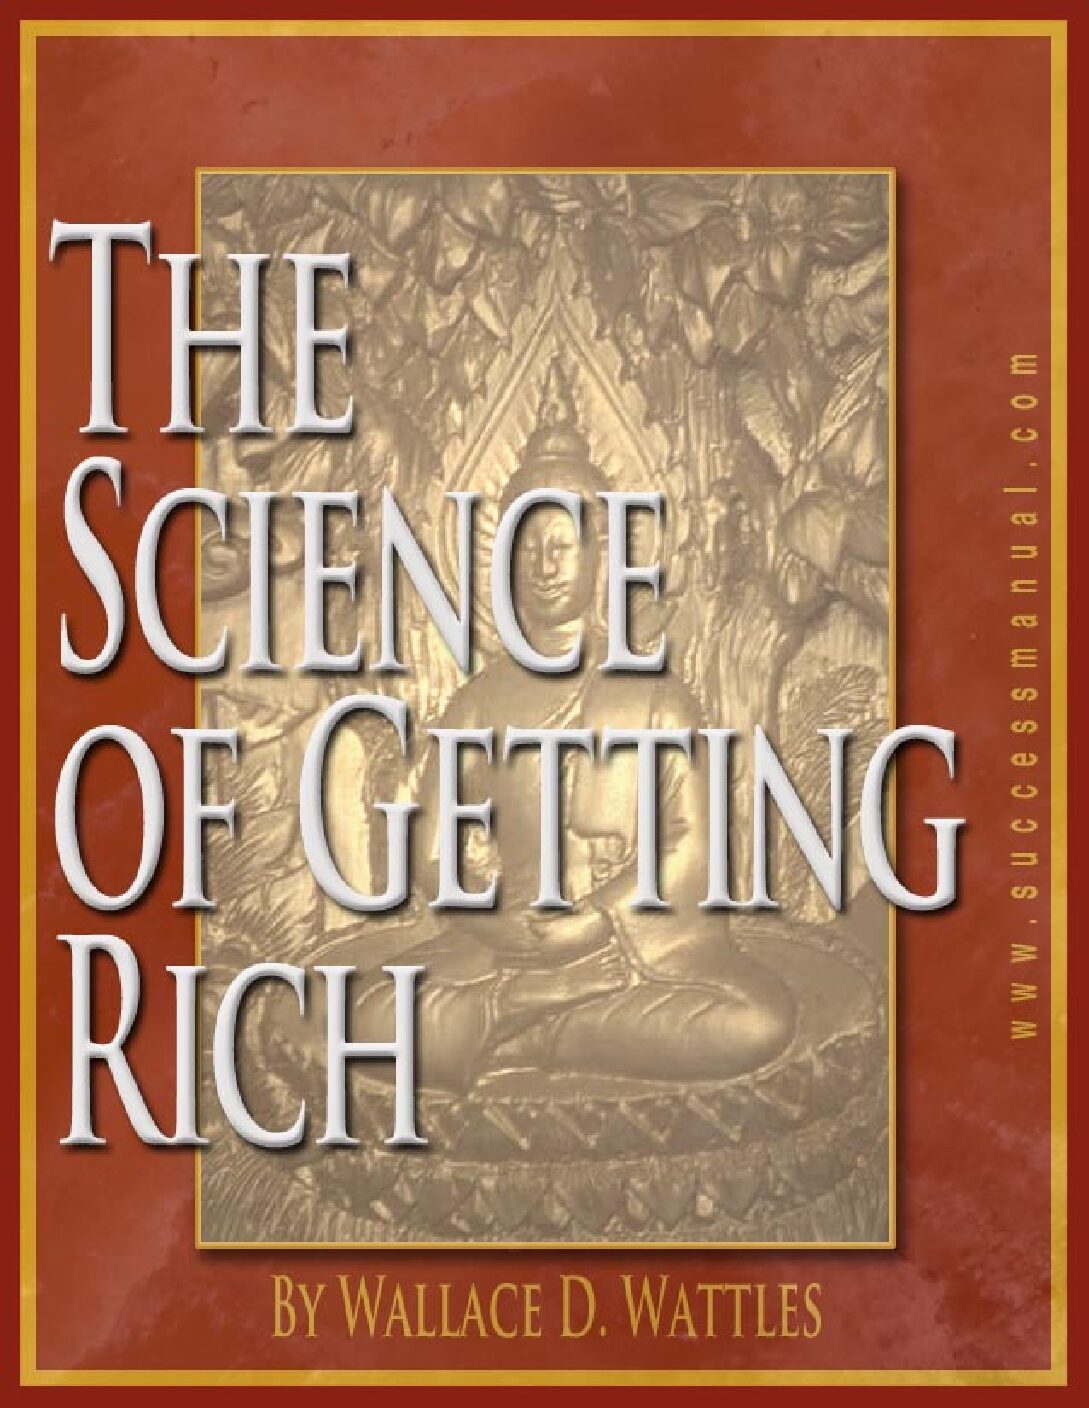 https://gerritweerdmeester.com/wp-content/uploads/2021/11/The-Science-of-Getting-Rich-pdf.jpg